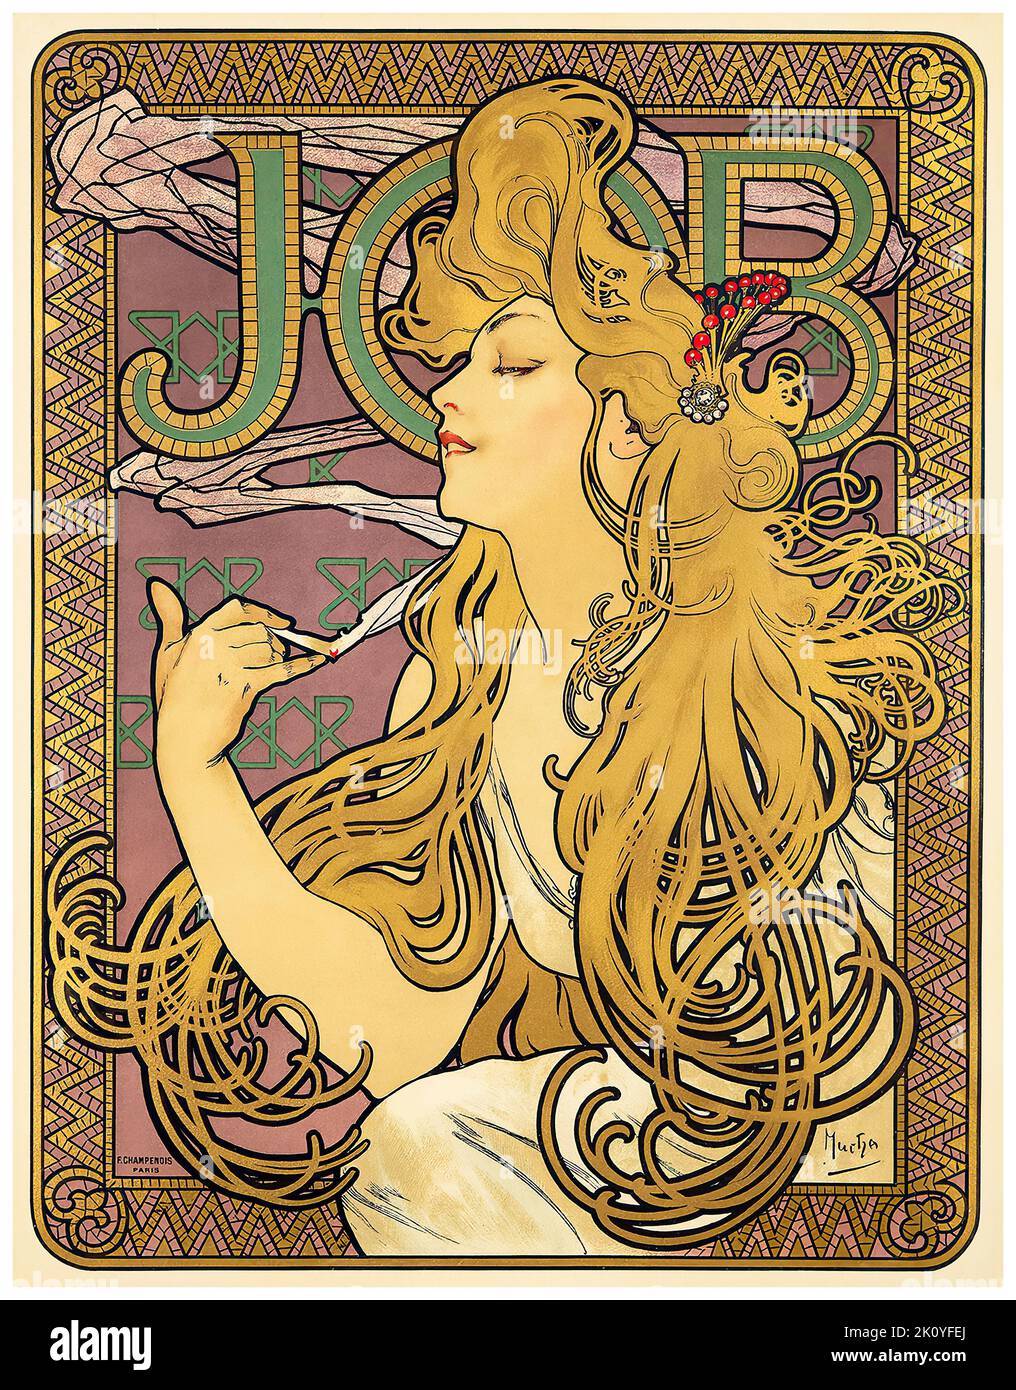 Job, vintage poster design by Alphonse Mucha, 1896 Stock Photo